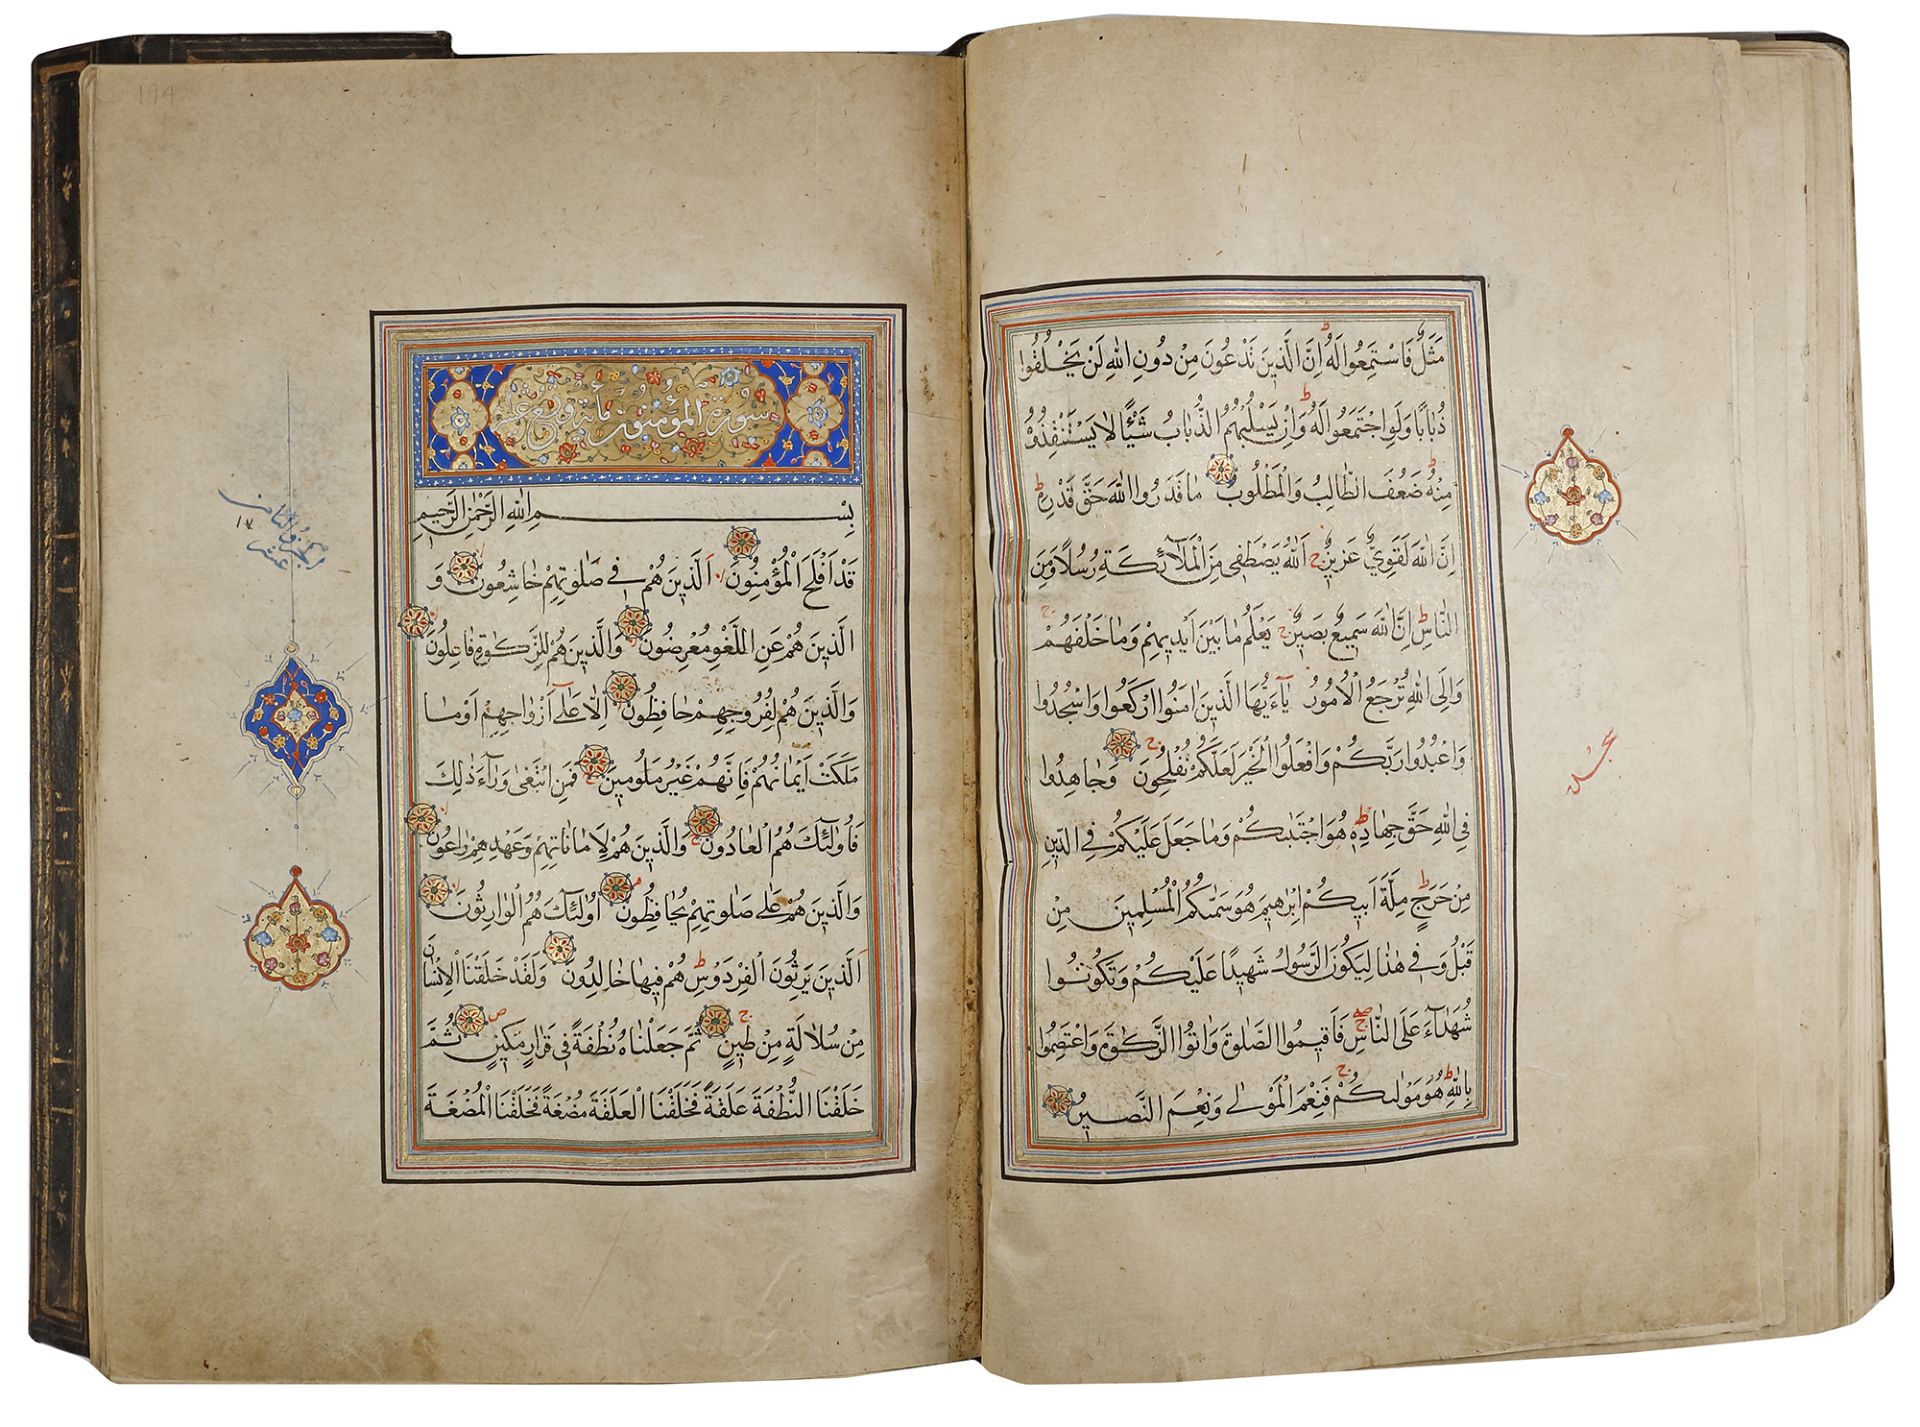 A LARGE ILLUMINATED QURAN, COPIED BY 'ALA'-AL-DIN MUHAMMAD AL-TABRIZI SAFAVID, PERSIA, 16TH CENT - Image 12 of 26